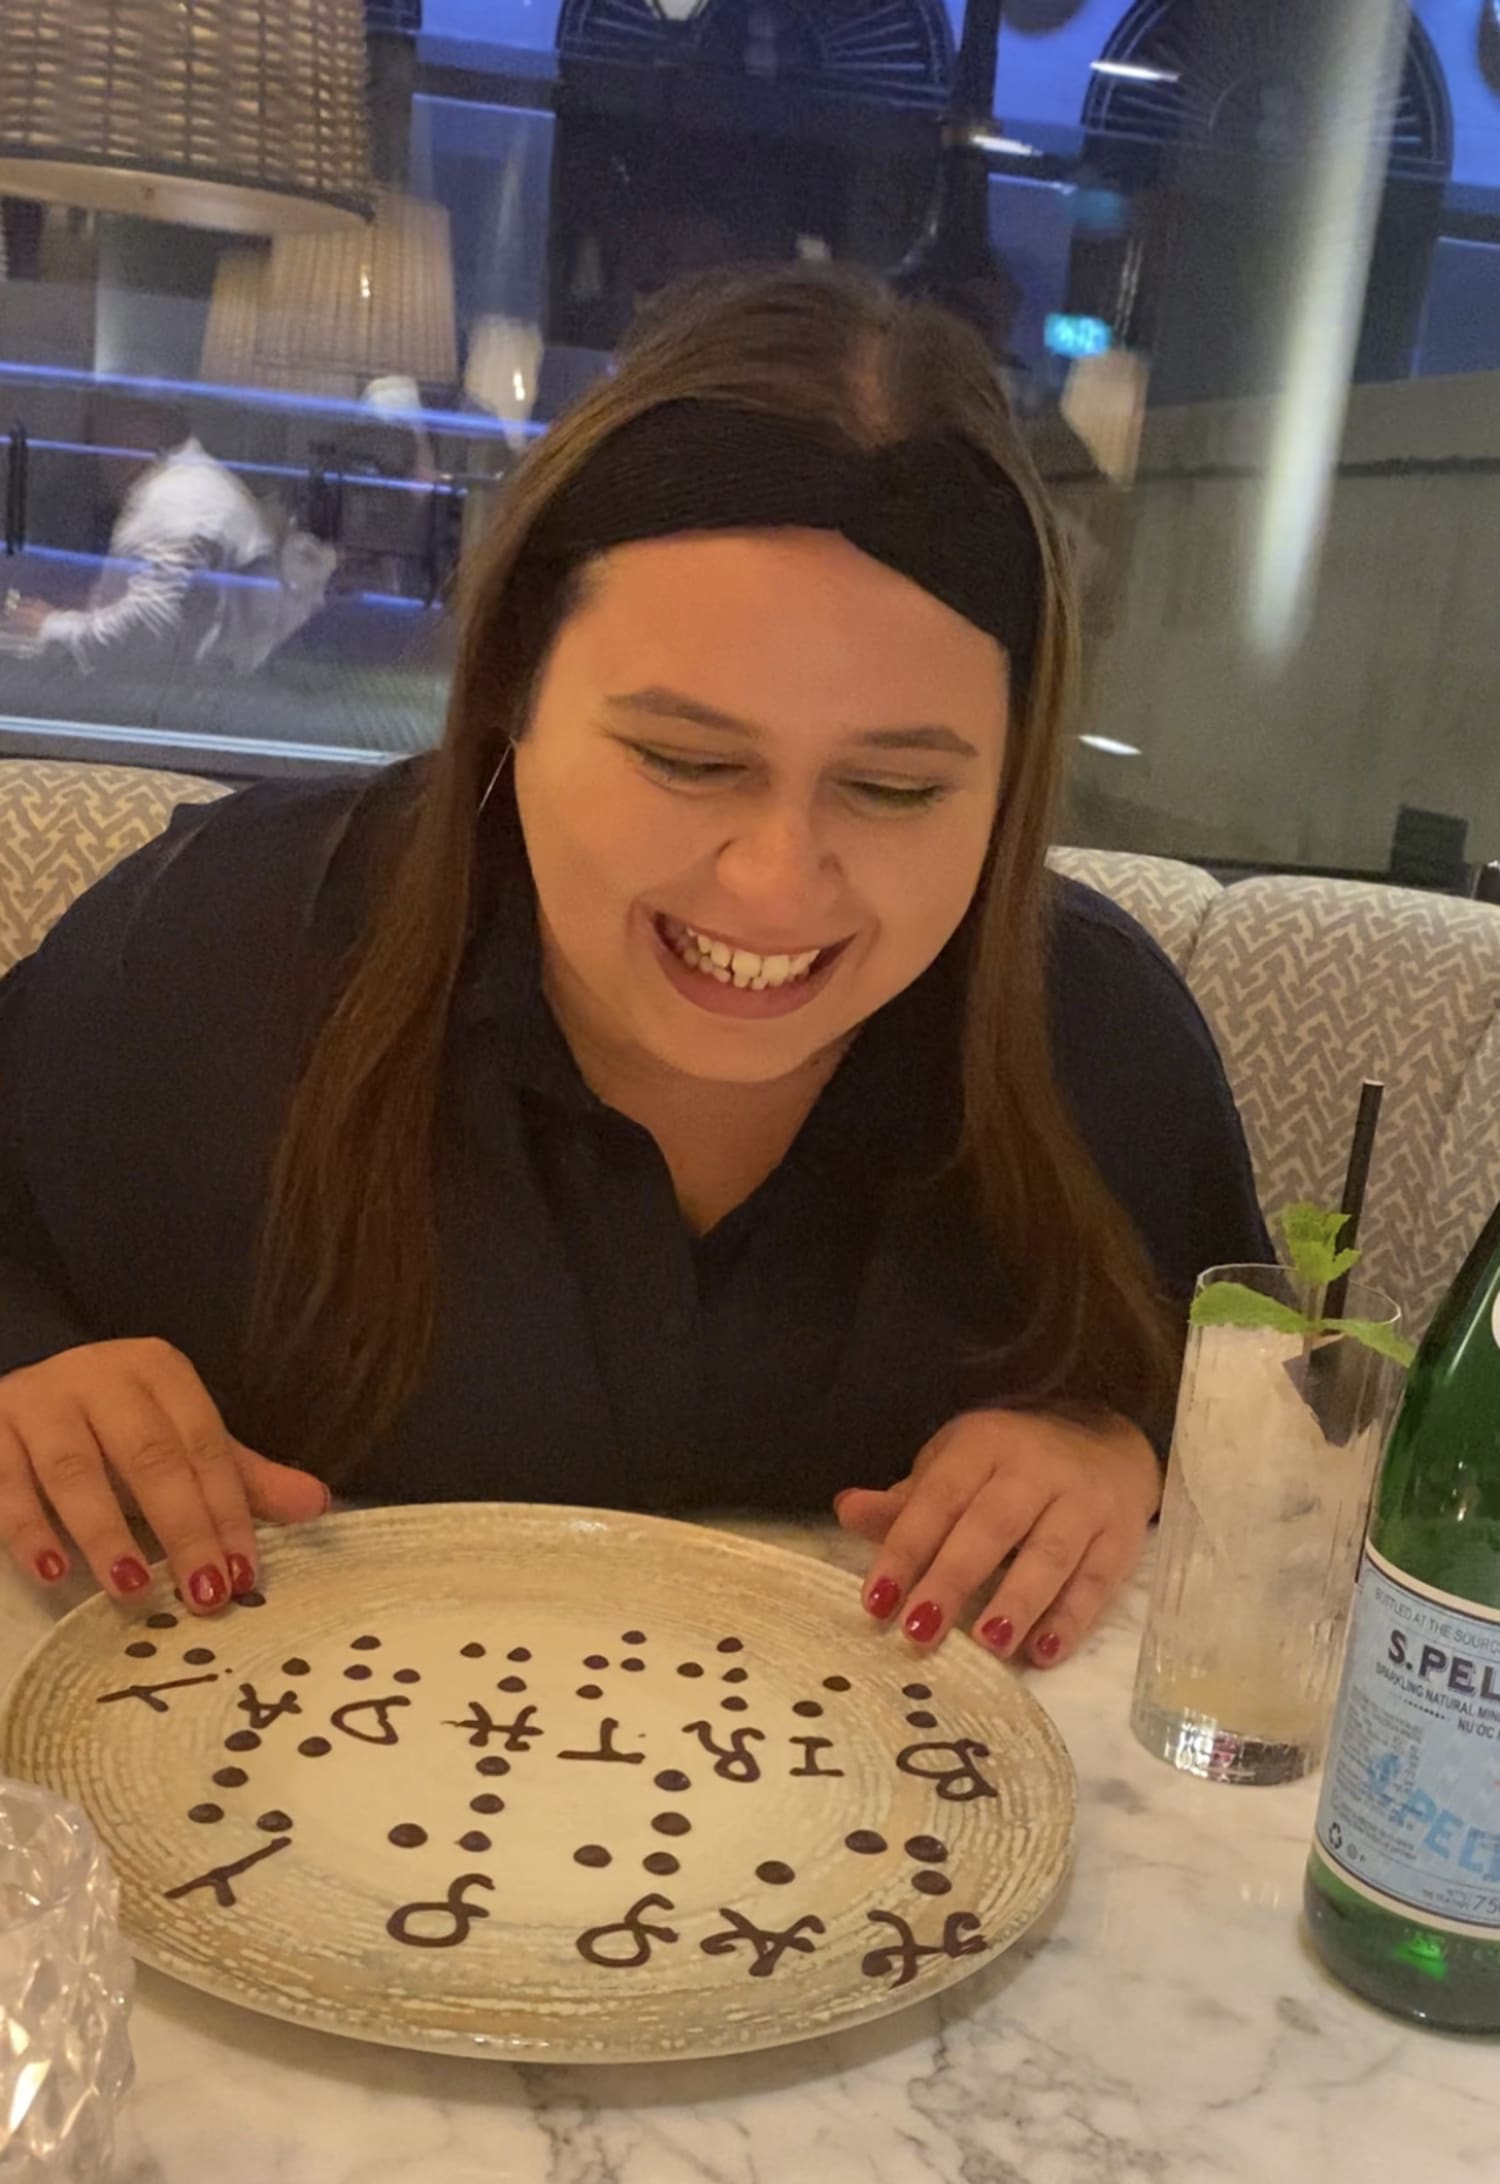 Restaurant surprises blind customer with birthday message in Braille